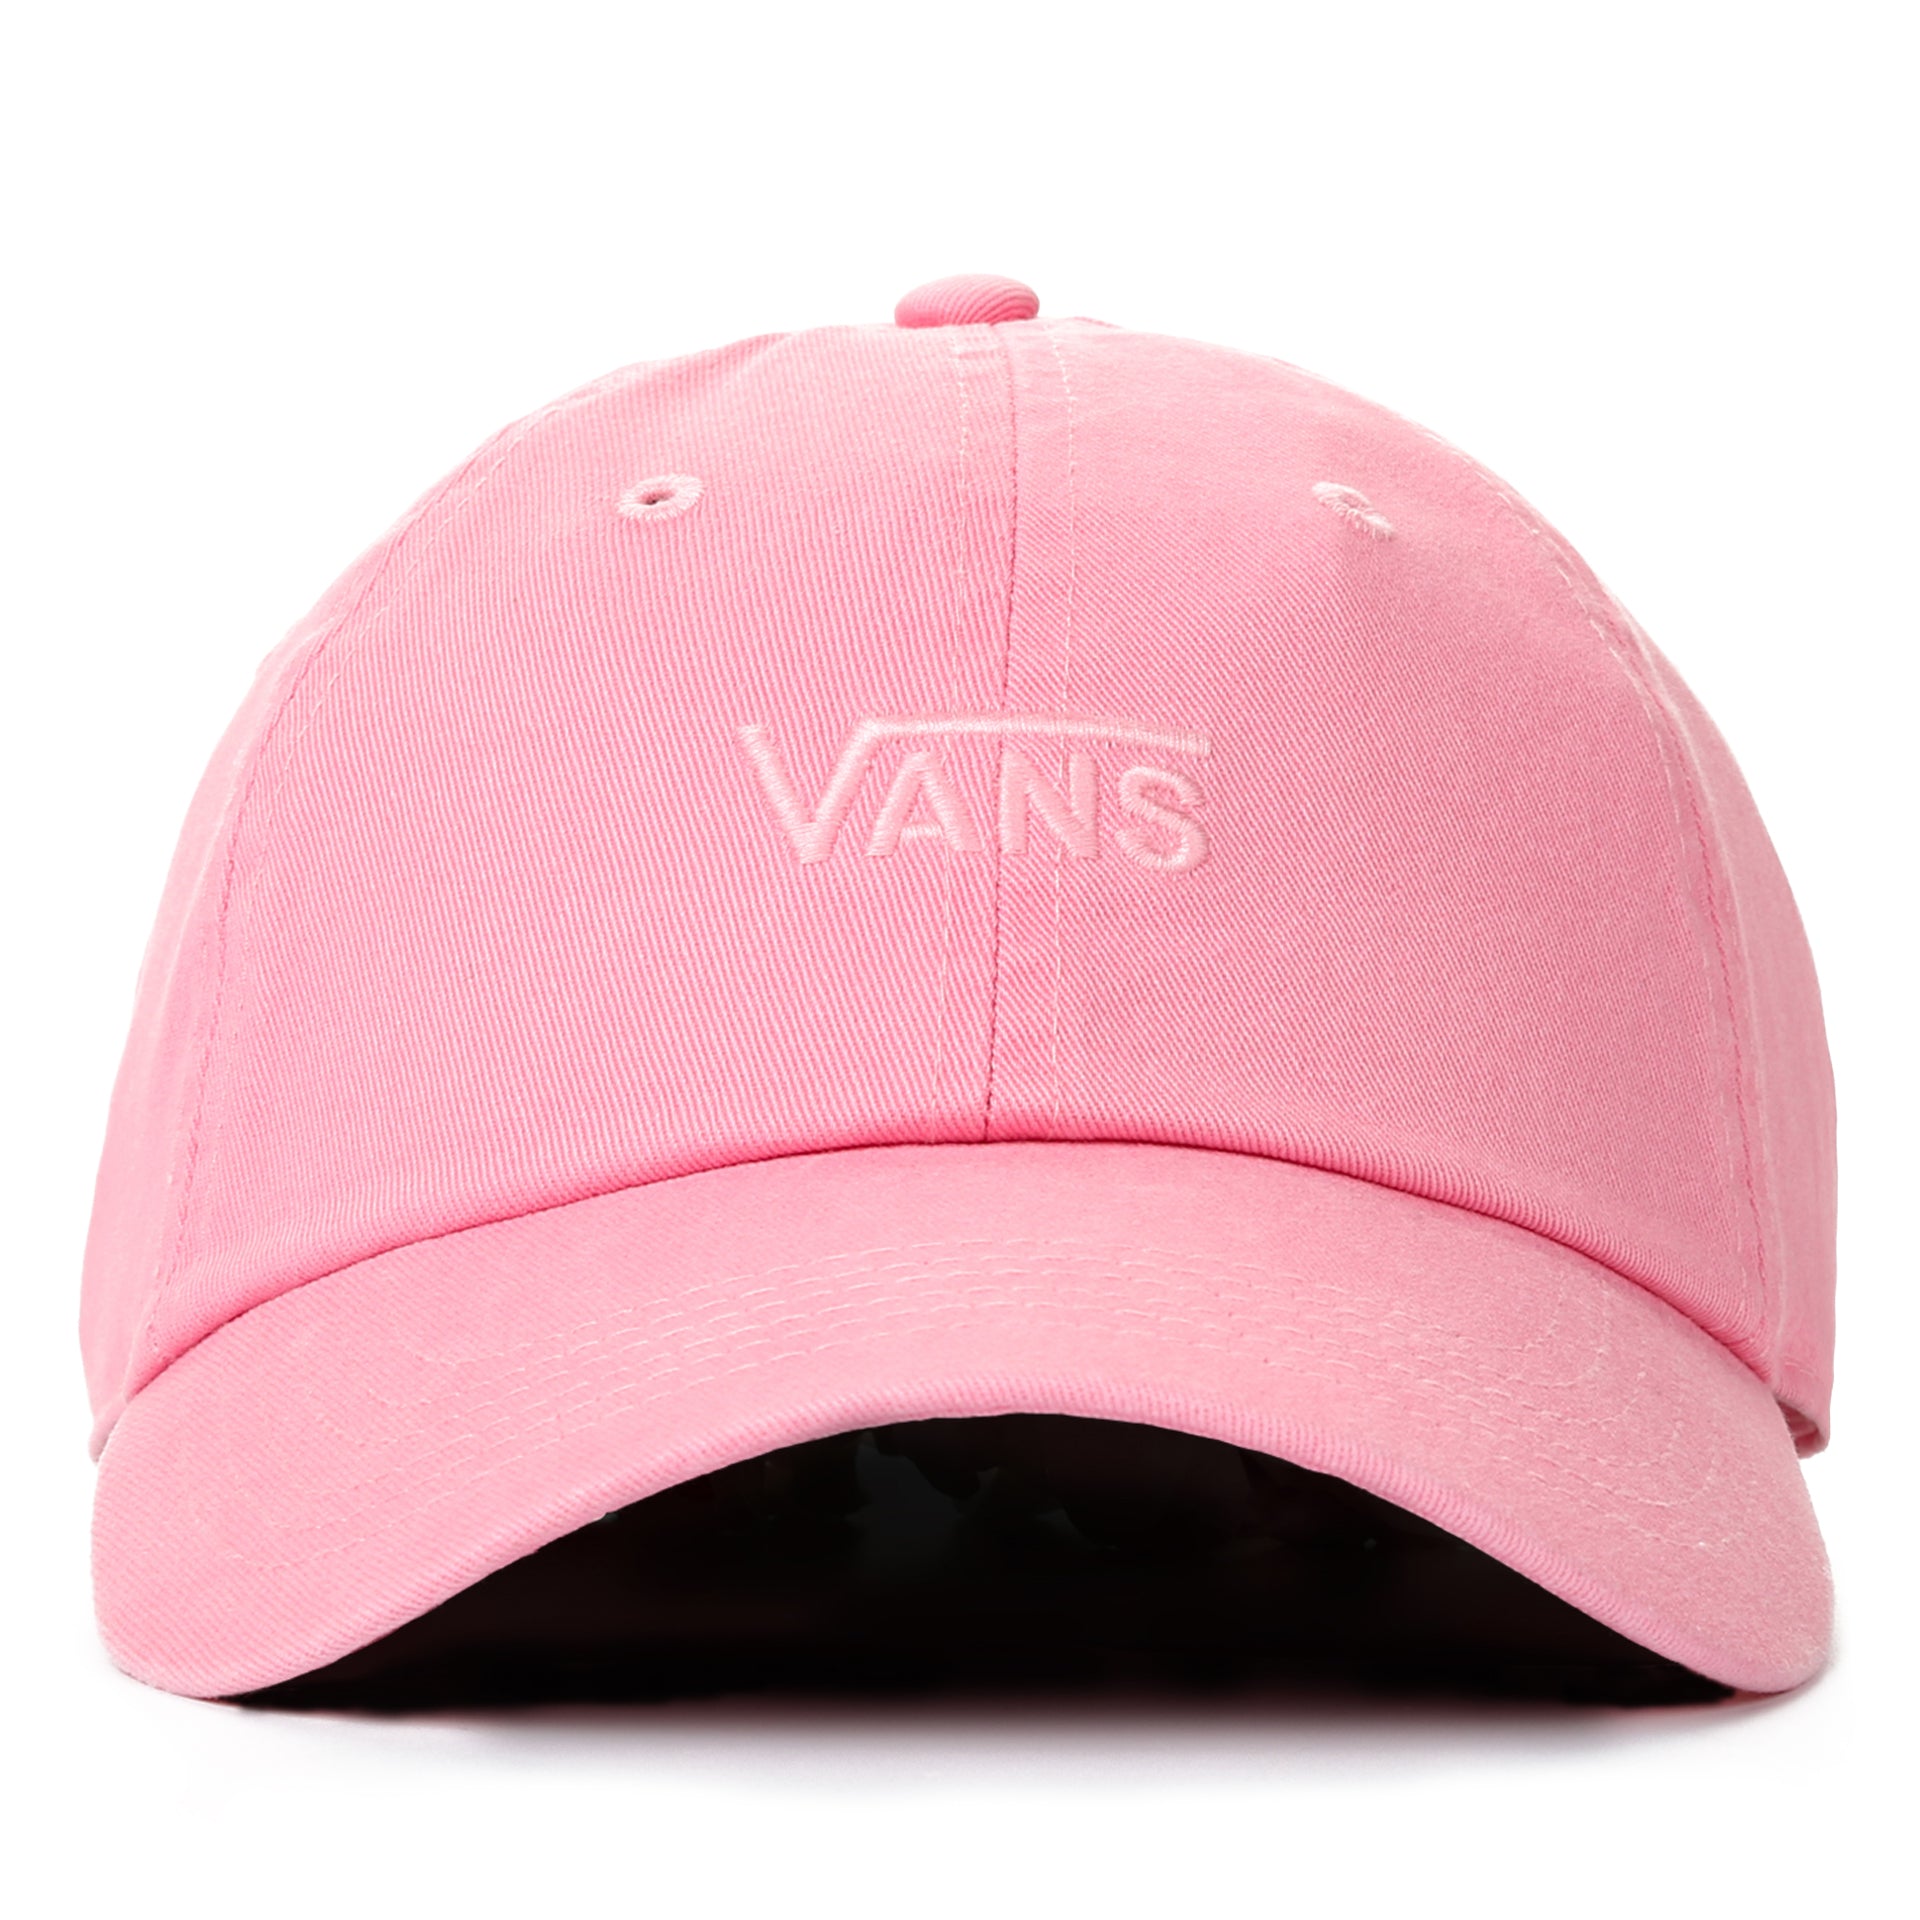 Vans Side Baseball Cap - Geranium Pink - New Star